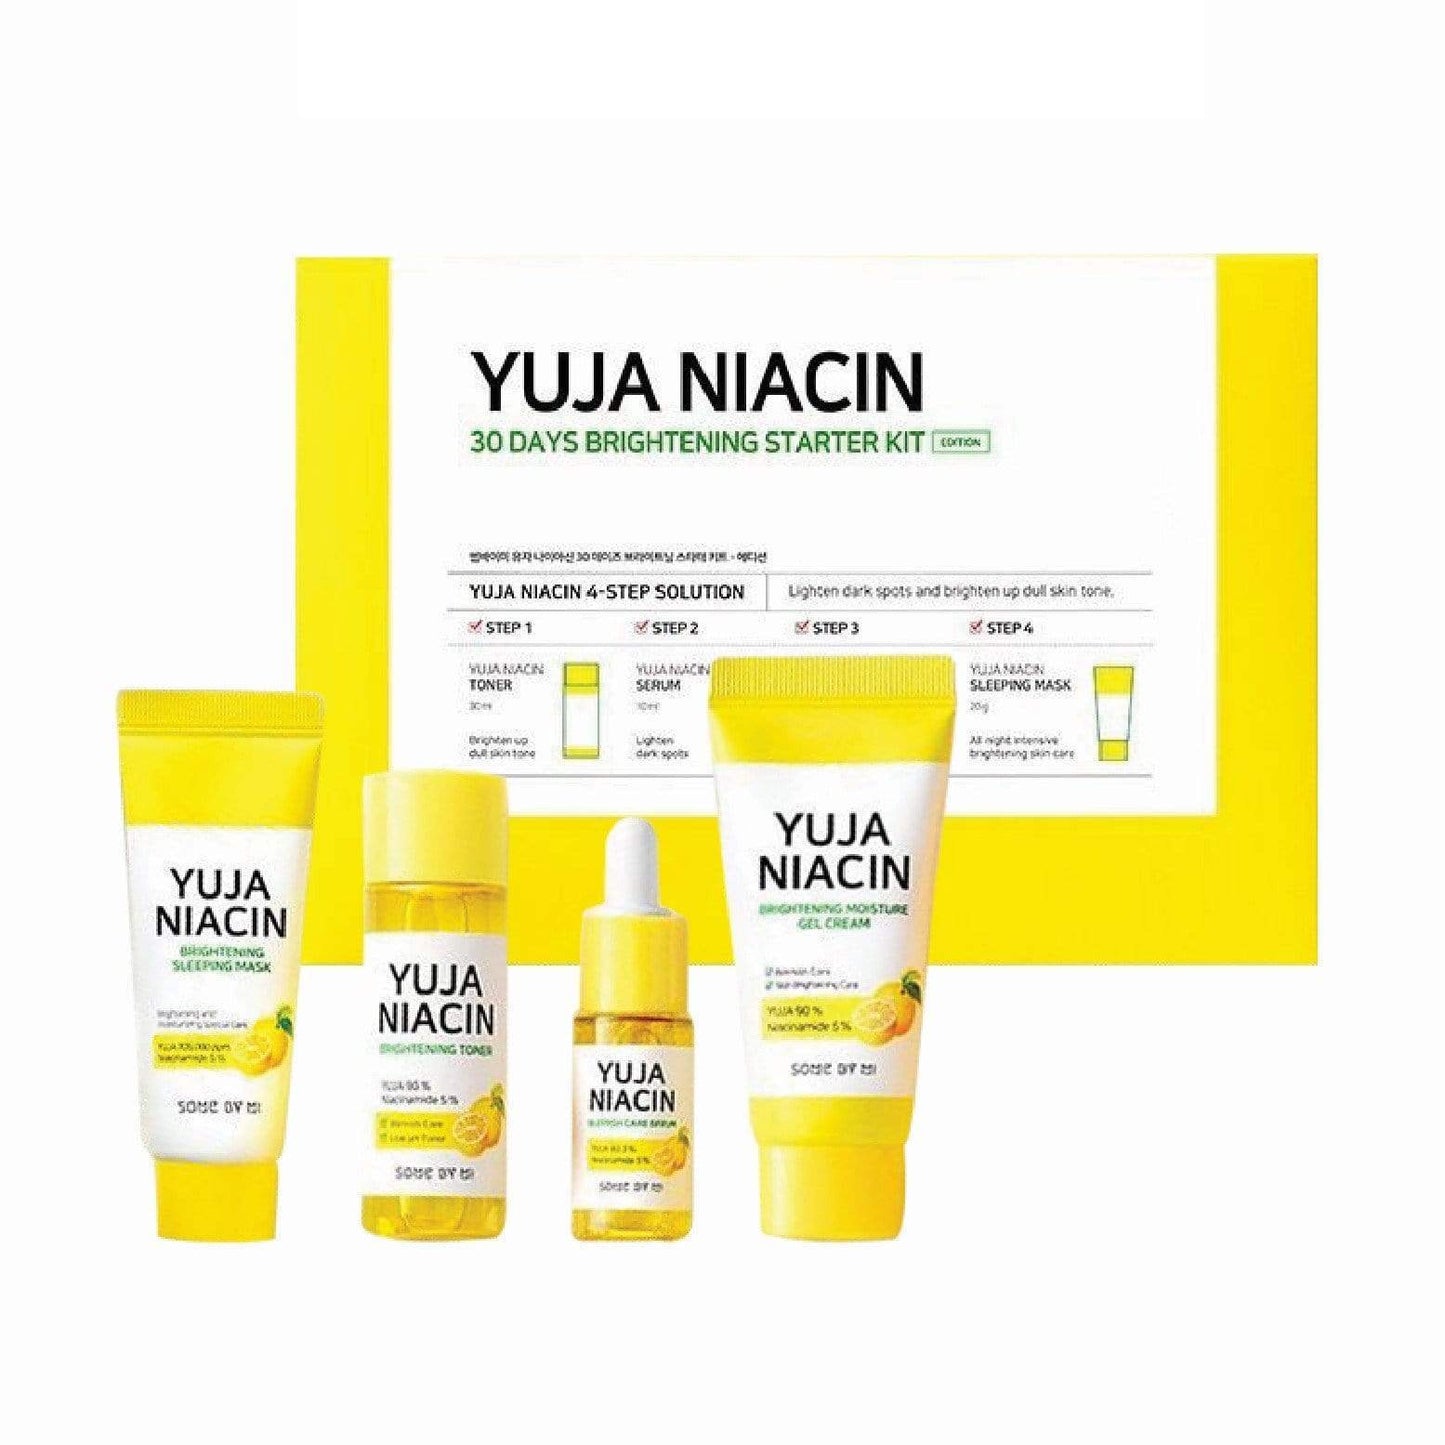 yuja niacin 30 days brightening starter kit Minoustore